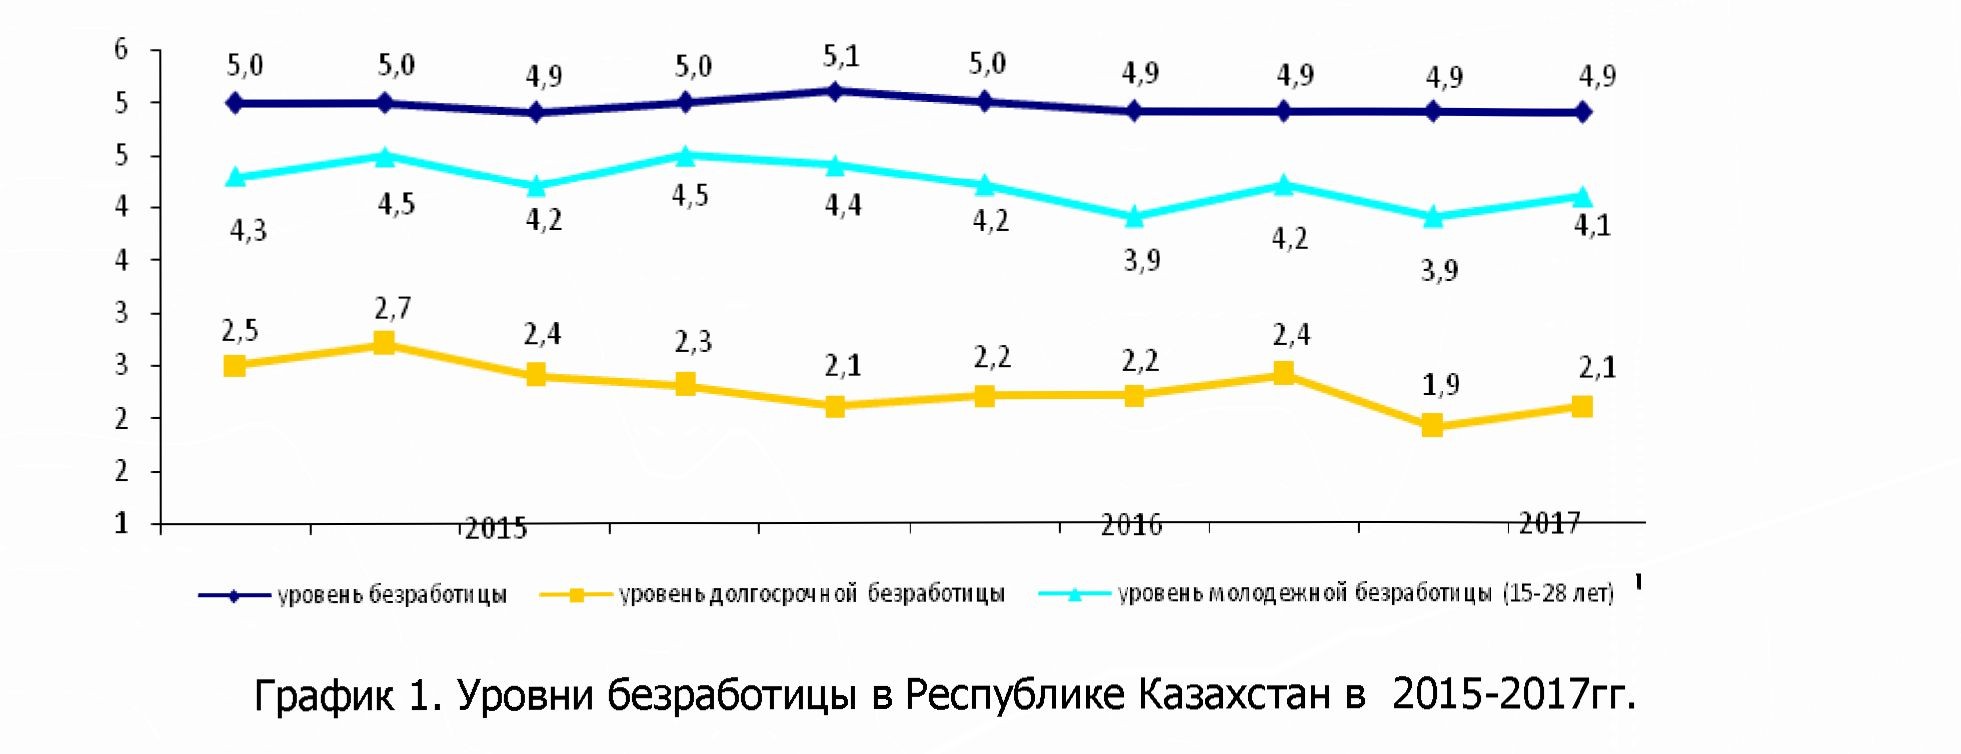 Анализ уровня безработицы в Казахстане